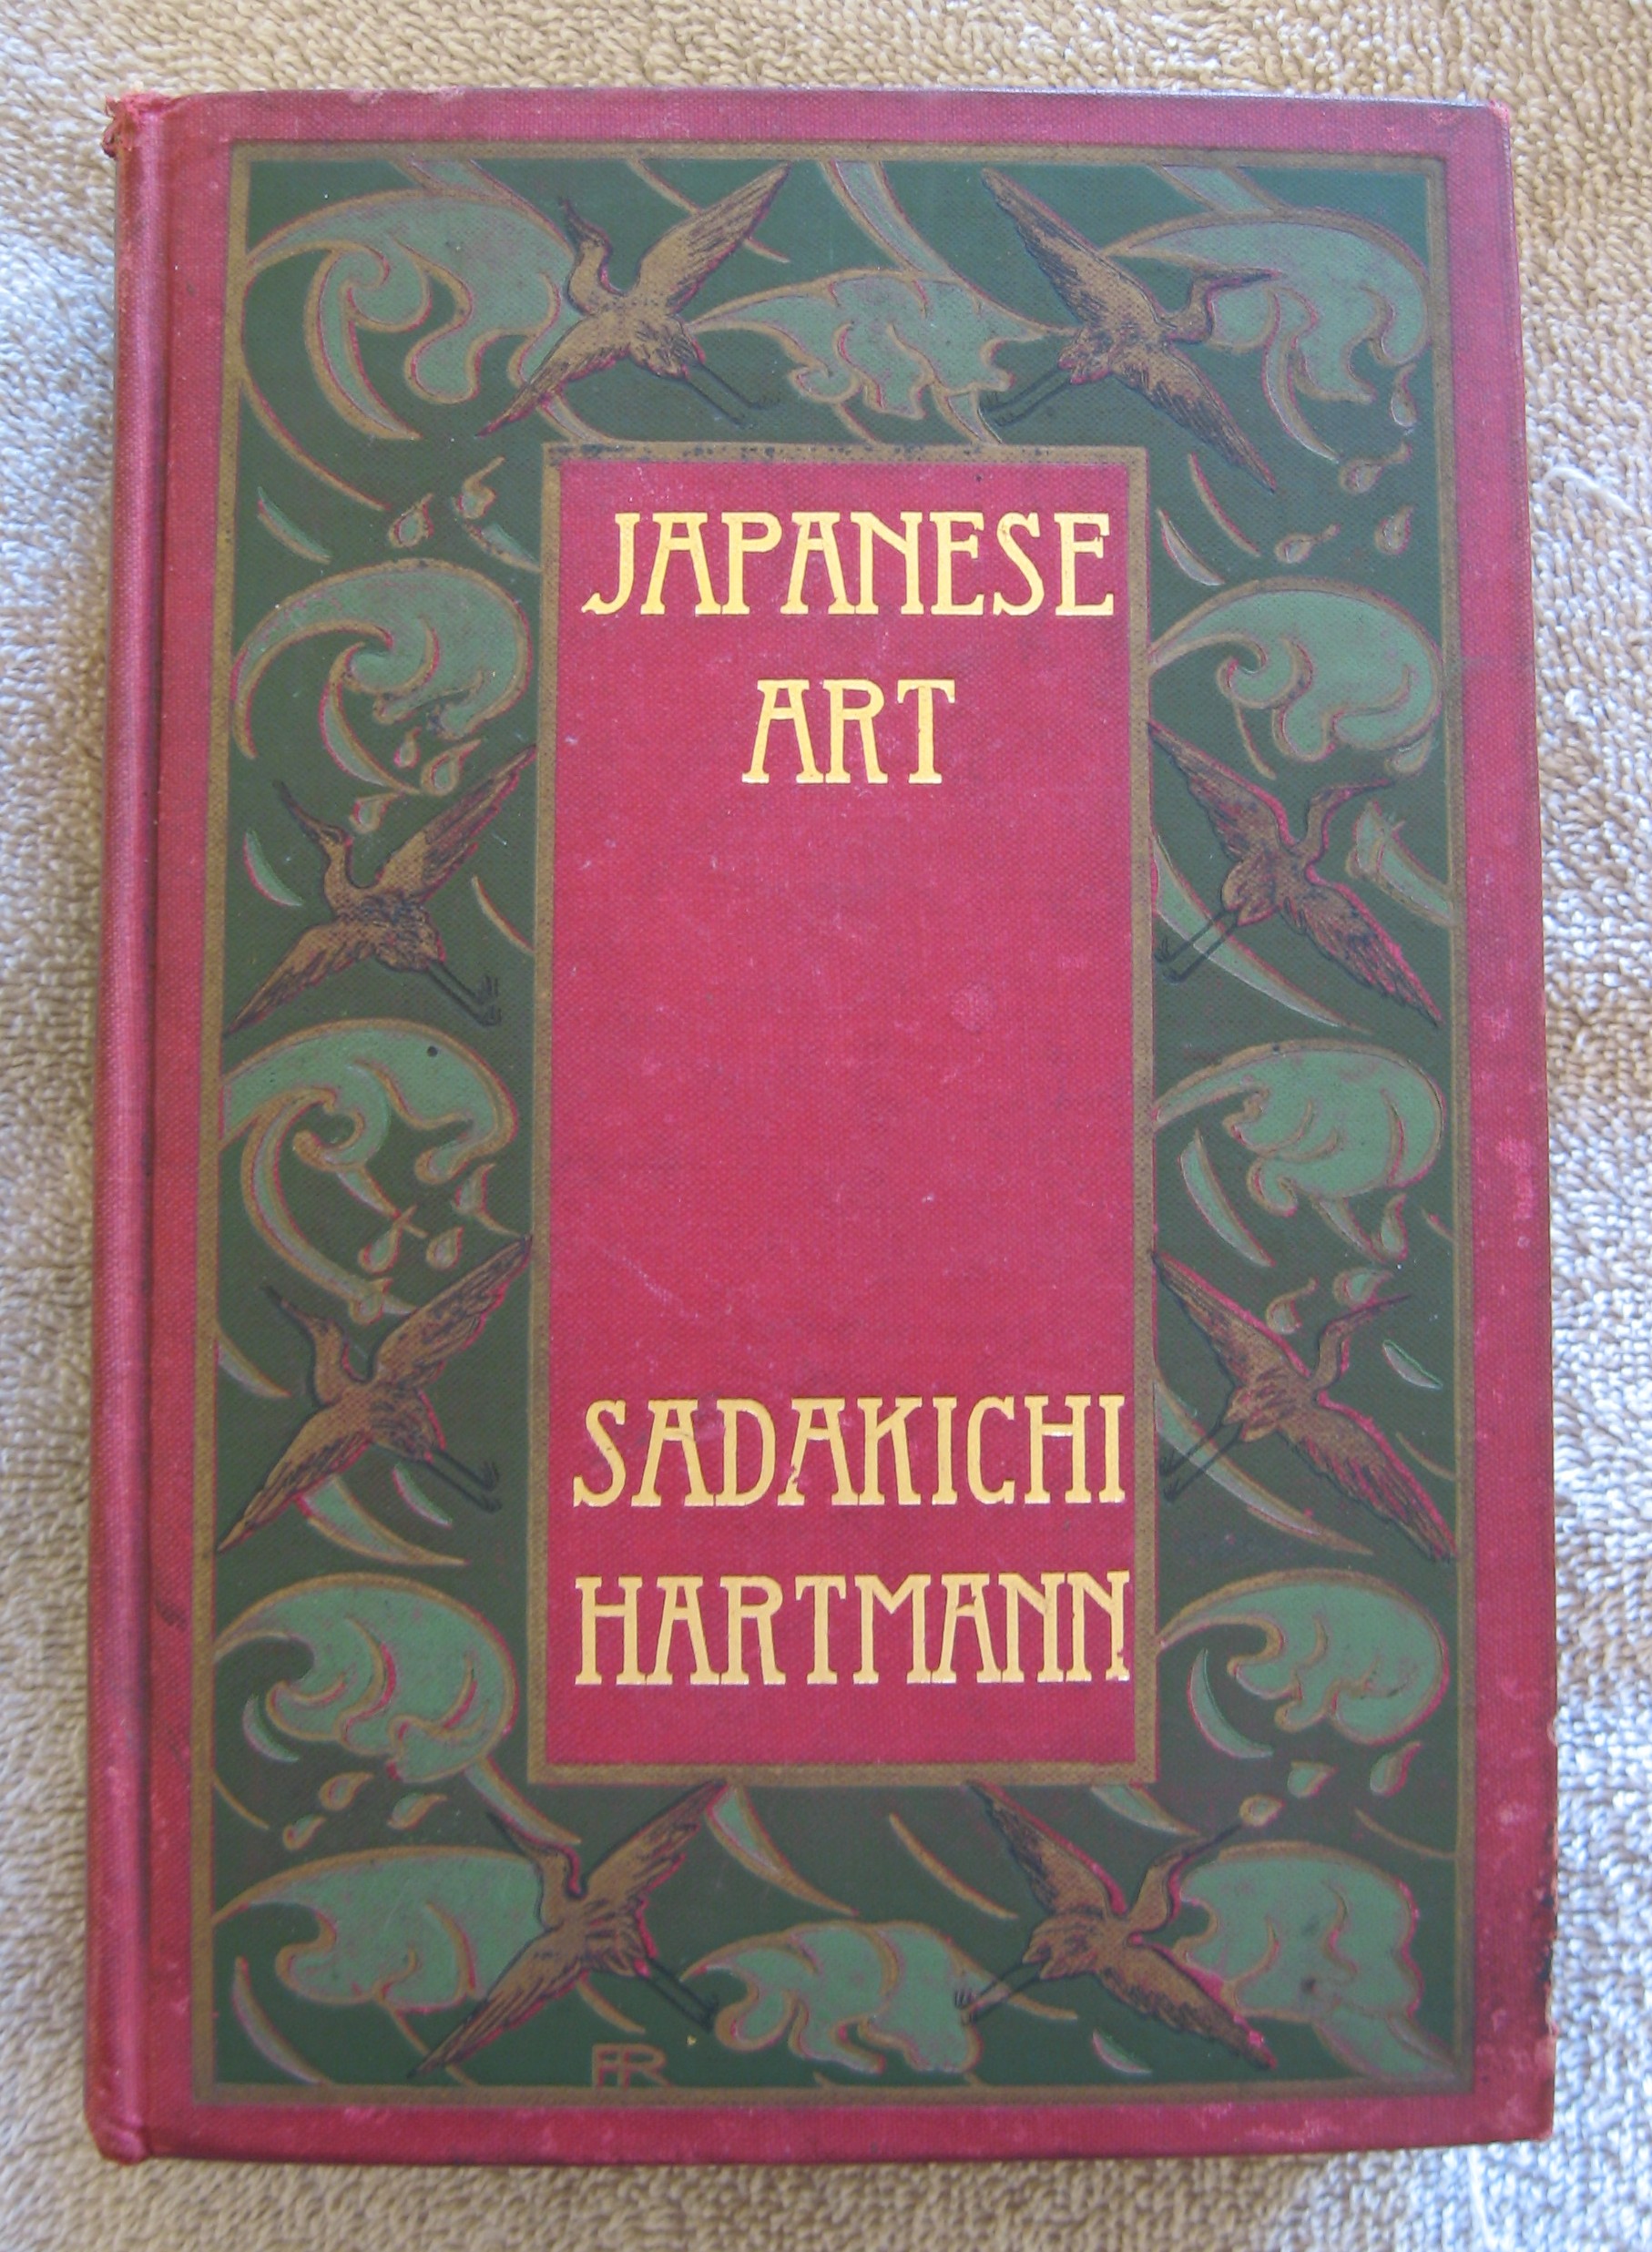 Japanese Art by Sadakichi Hartmann